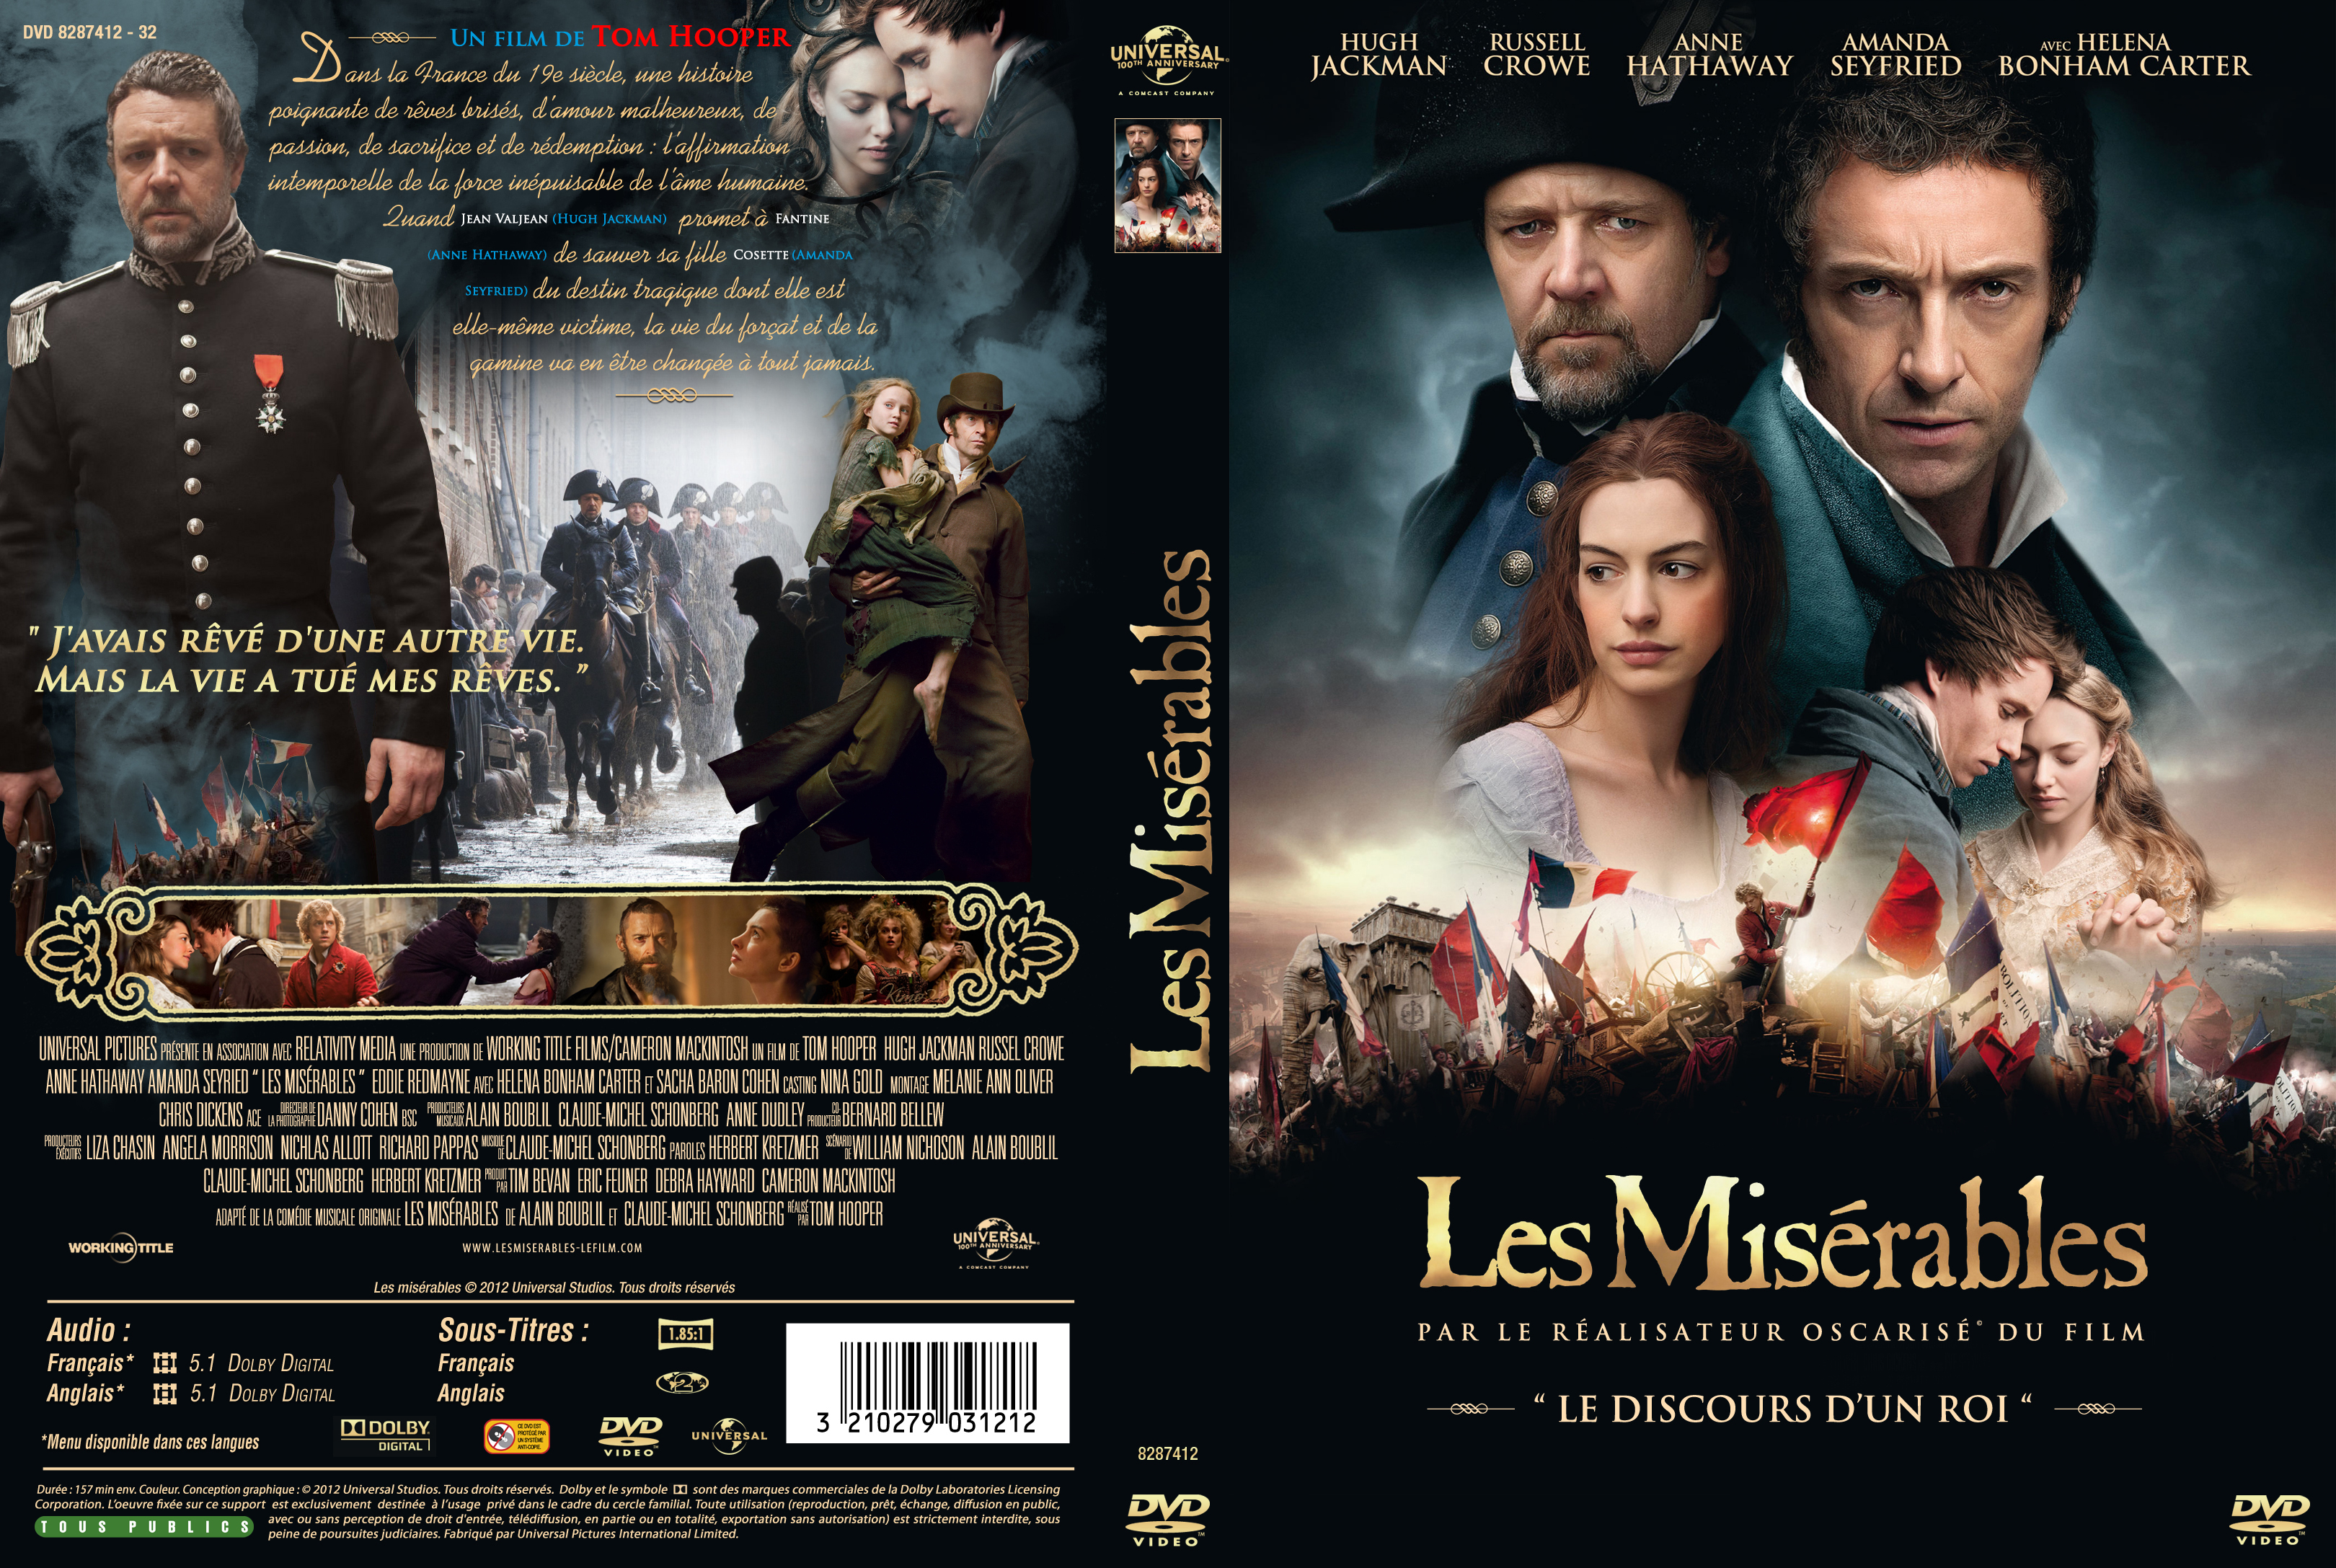 Jaquette DVD Les misrables 2013 custom